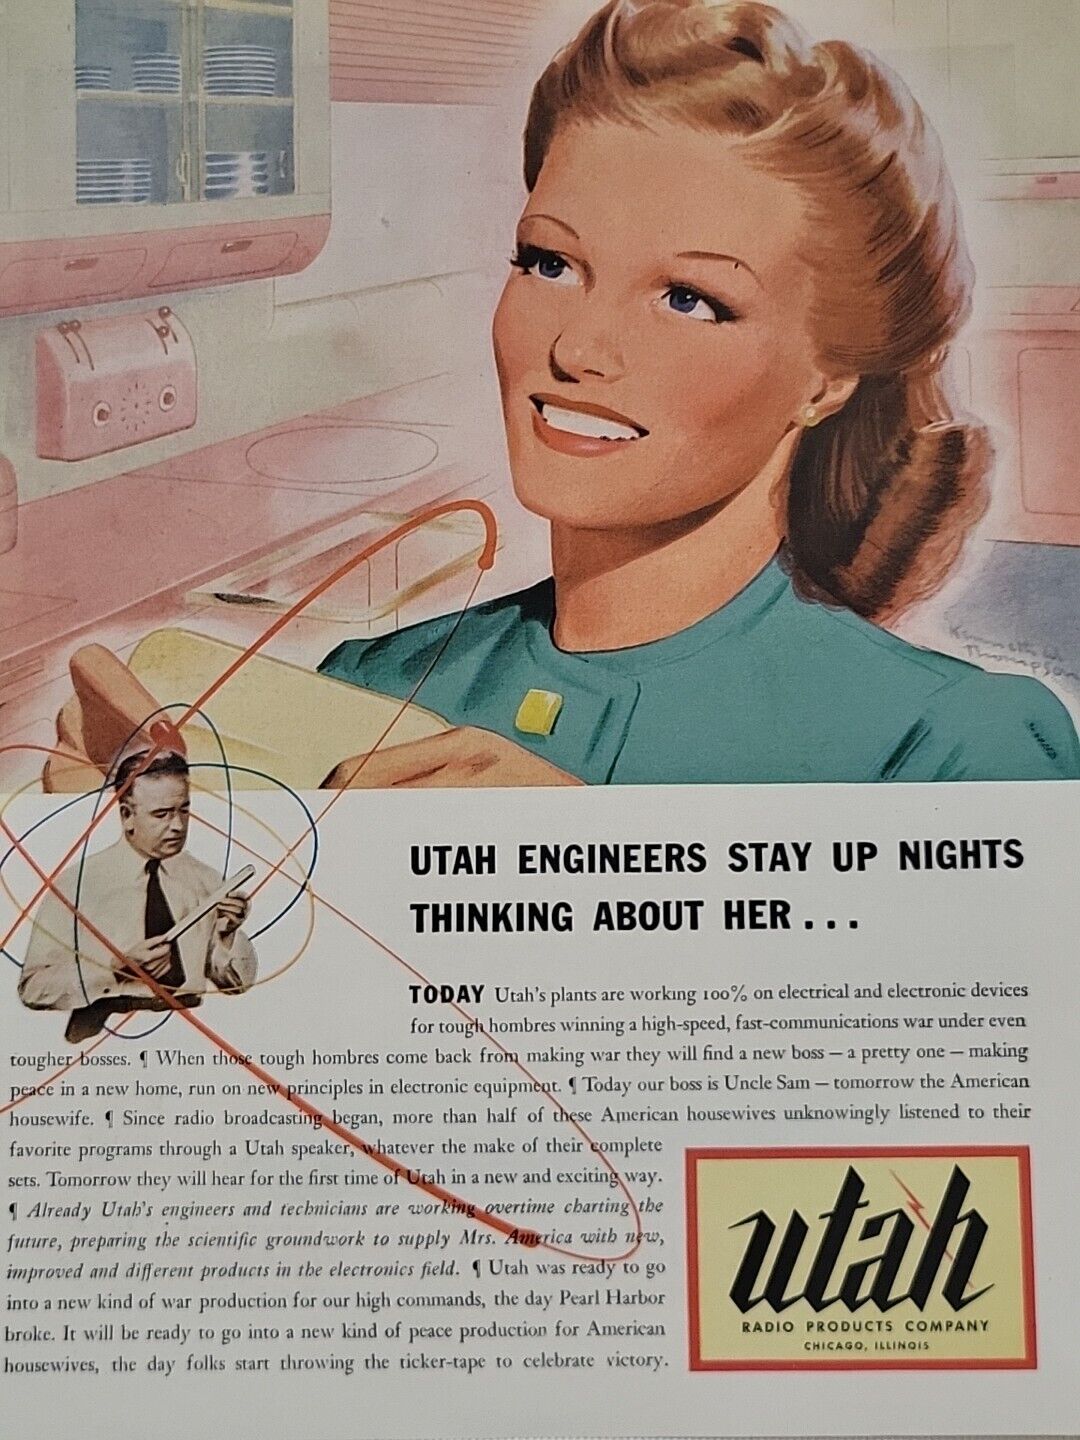 1943 Utah Radio Products Company Fortune WW2 Print Ad Chicago Engineer Housewife